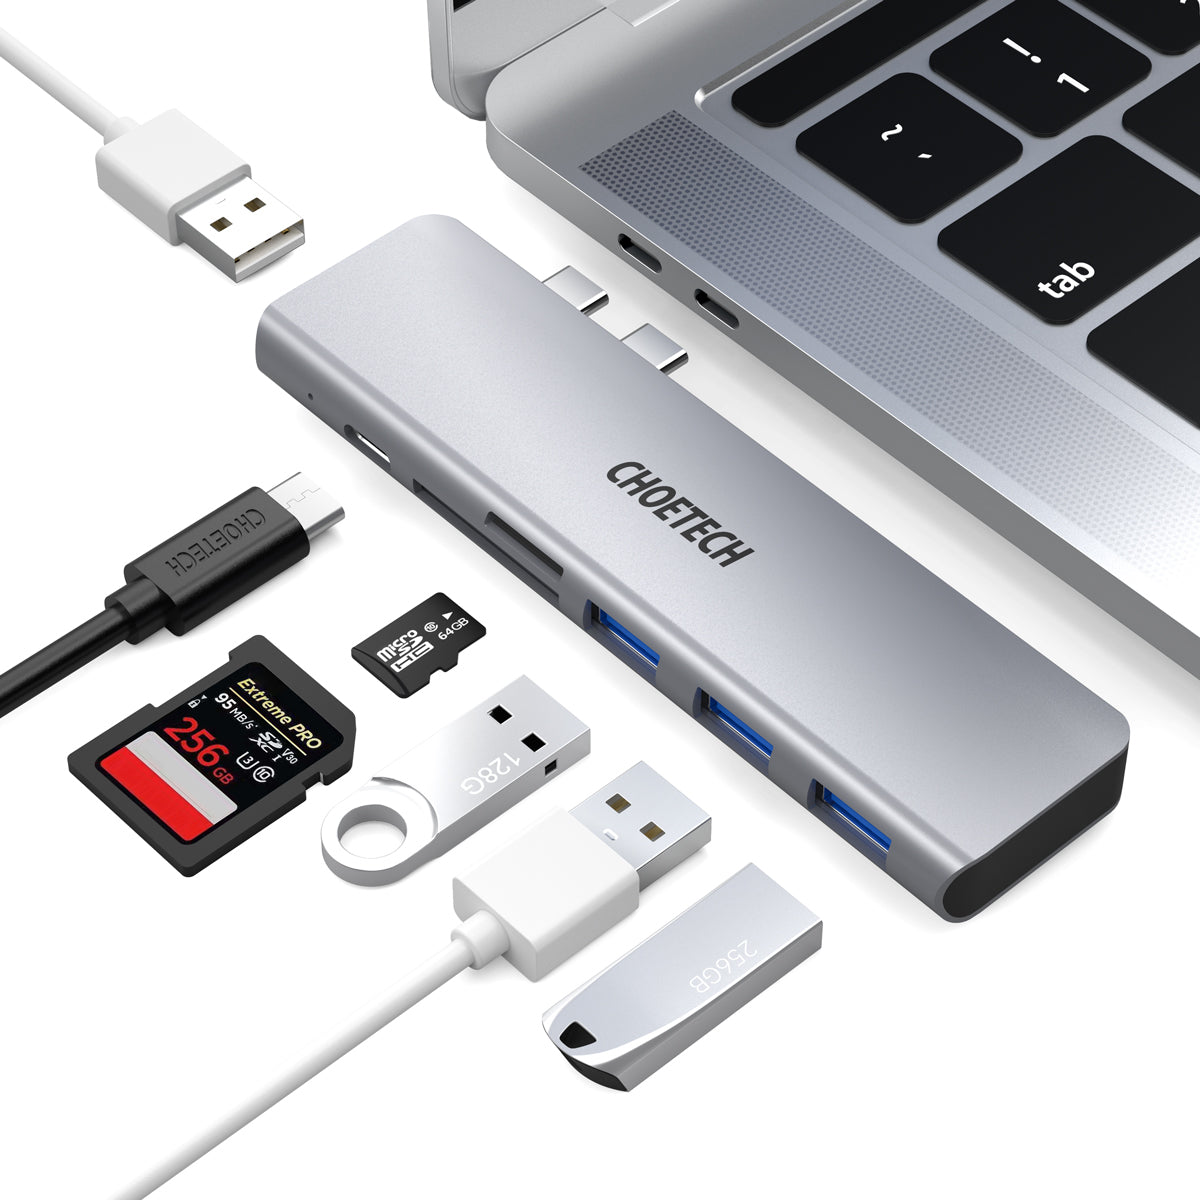 Adaptateur USB HUB-M23 MacBook Pro, adaptateur MacBook Air CHOETECH 7 en 1 pour MacBook Pro/Air 13-16